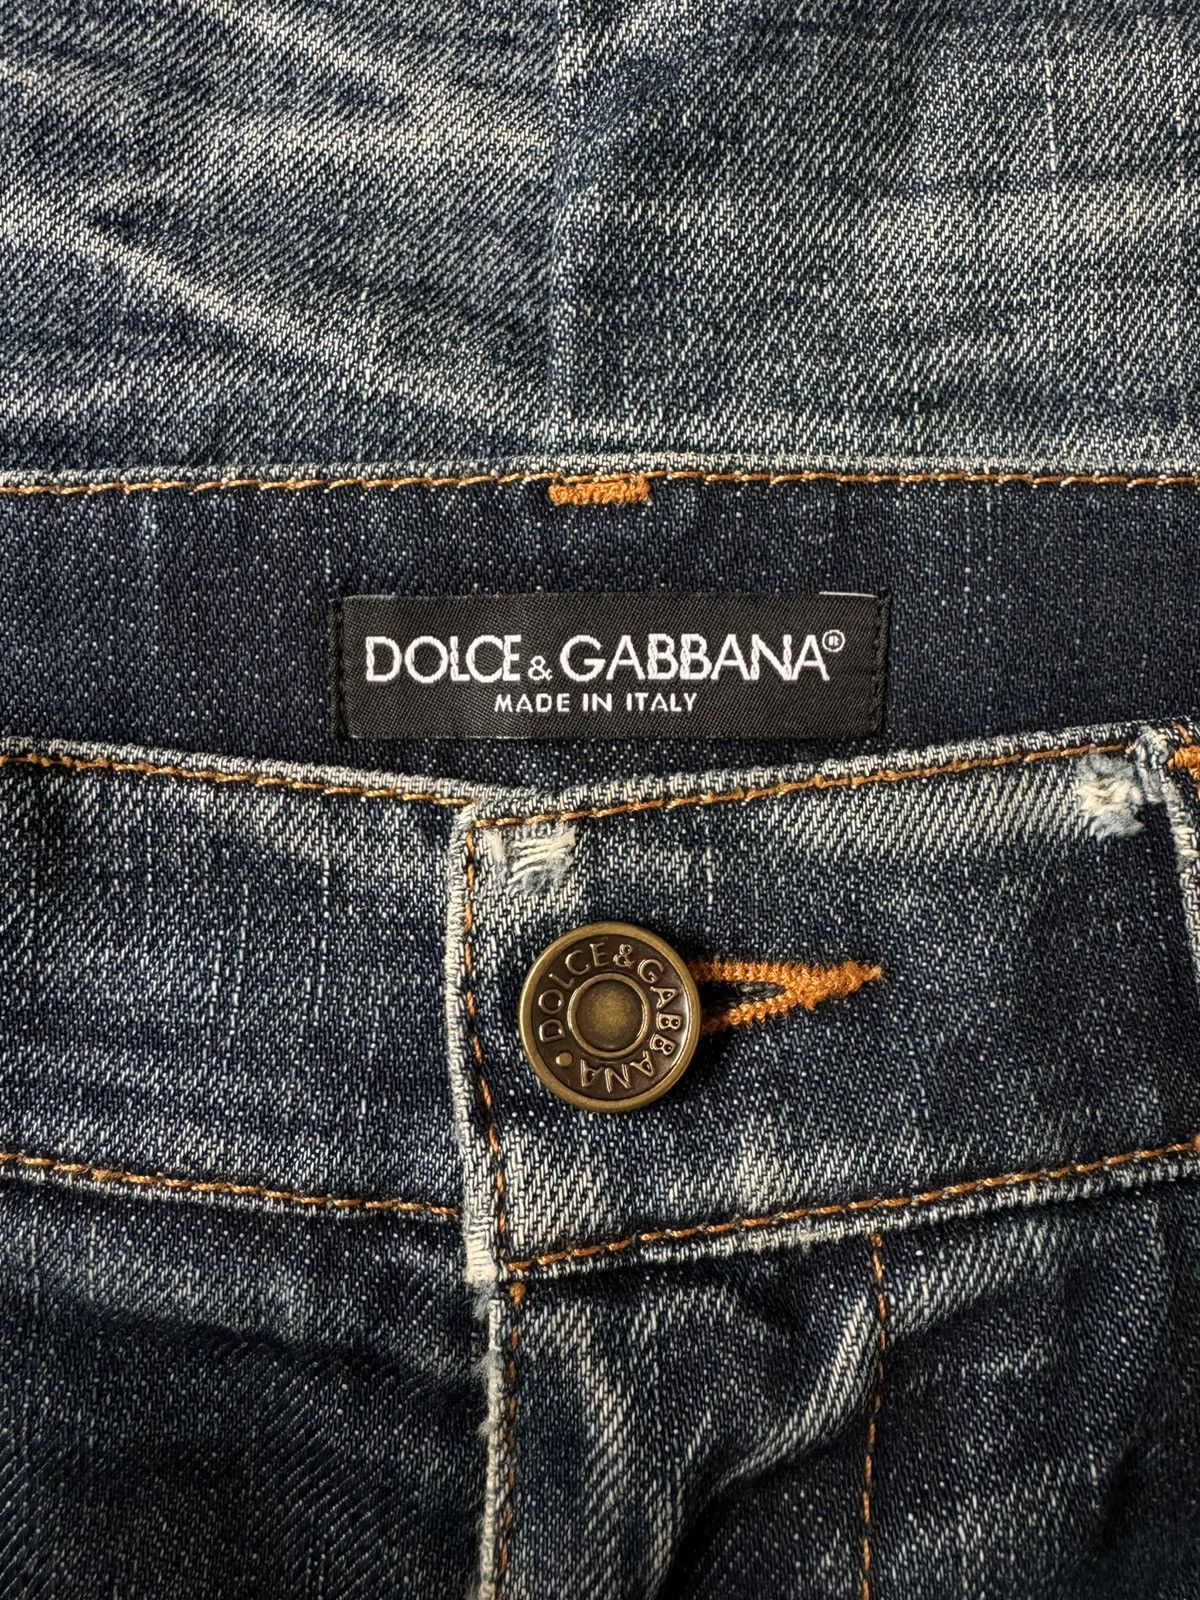 Dolce & Gabbana Dolce & Gabbana Distressed Leather Plate Denim Size US 32 / EU 48 - 2 Preview